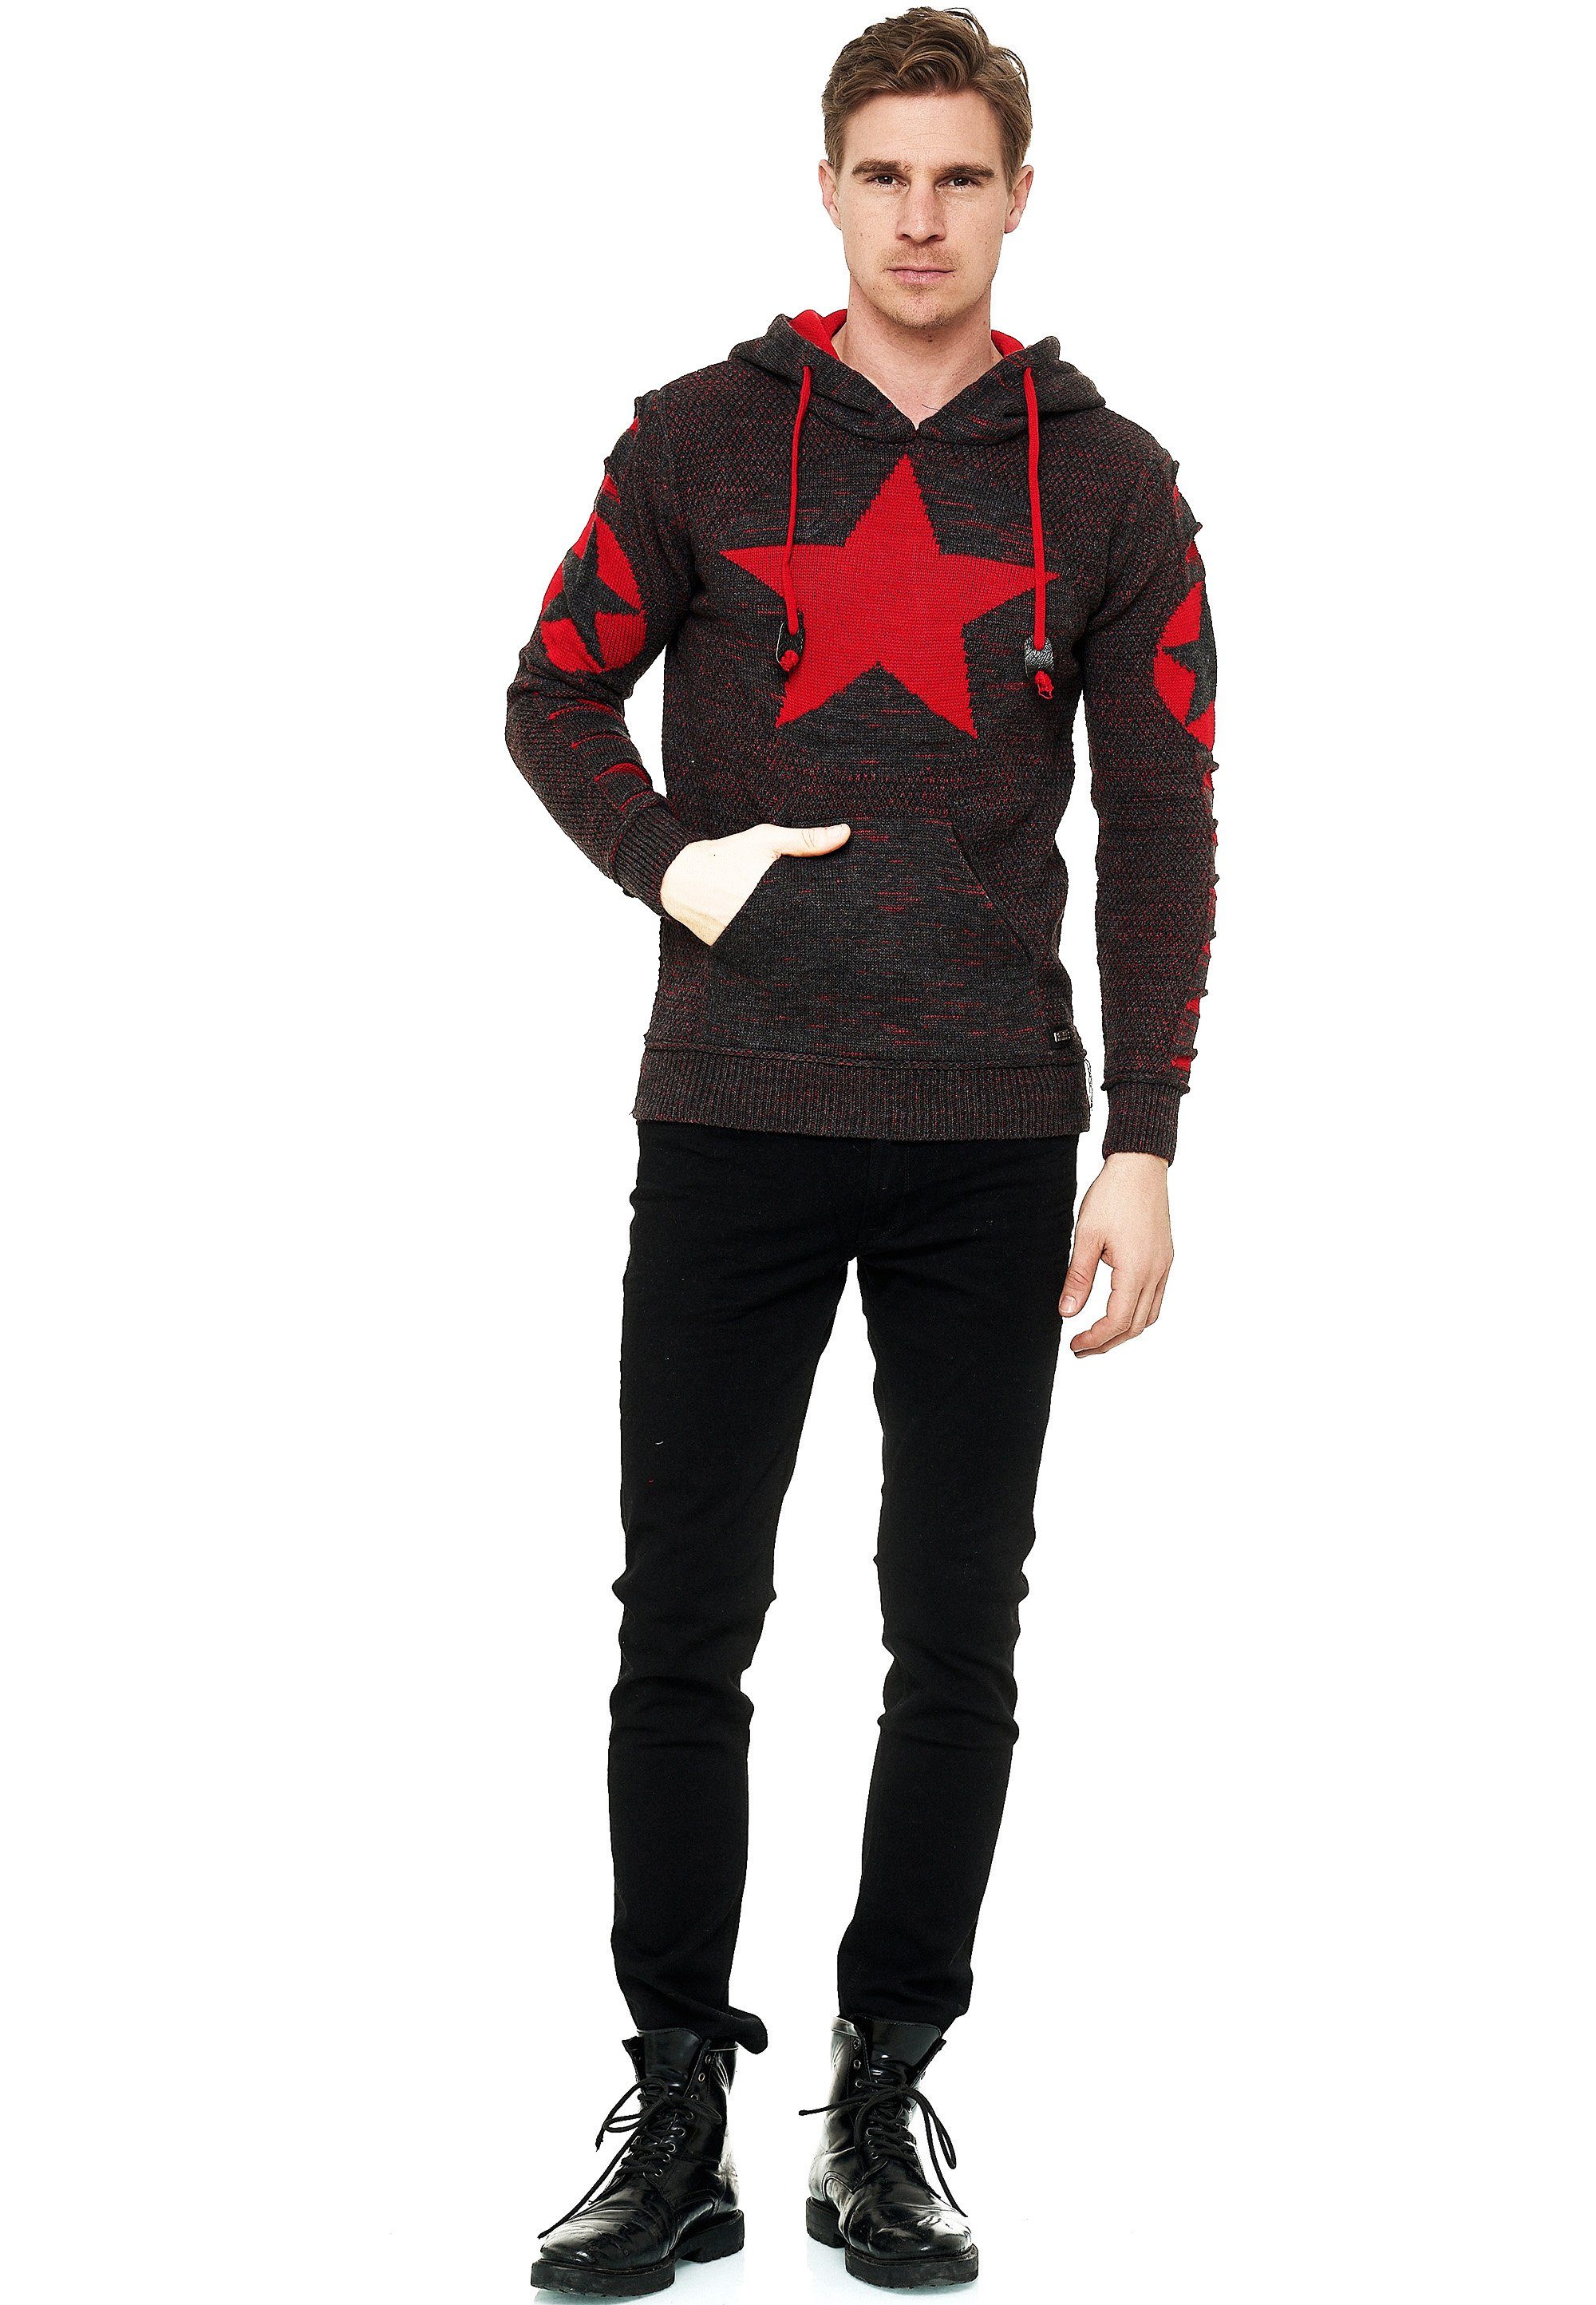 Rusty Neal Kapuzensweatshirt mit großem schwarz-rot Stern-Design